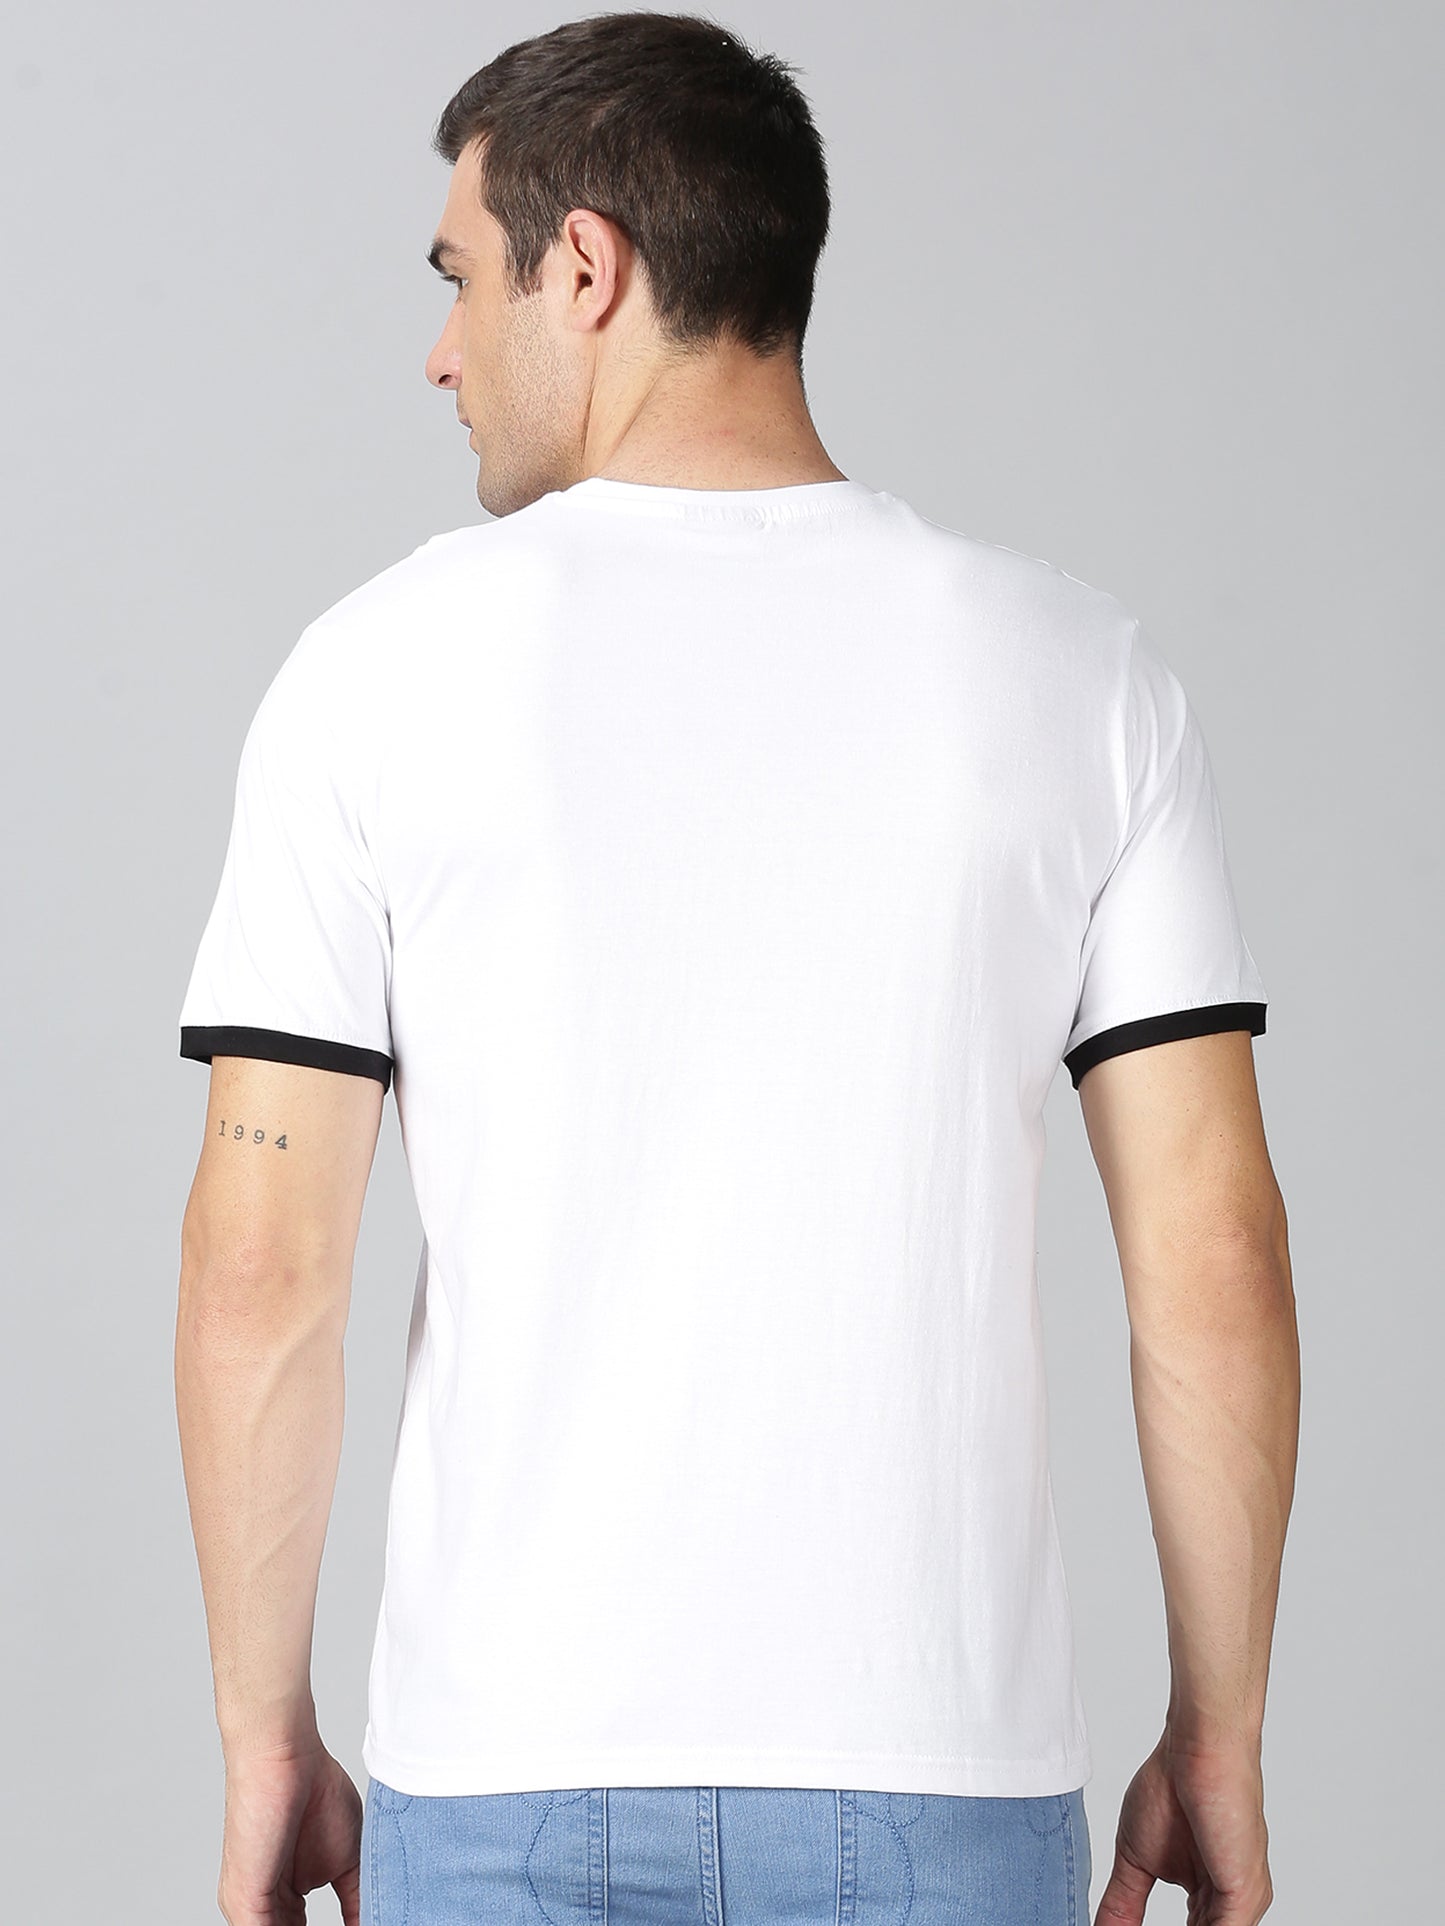 ColourBlocked T-Shirt: White